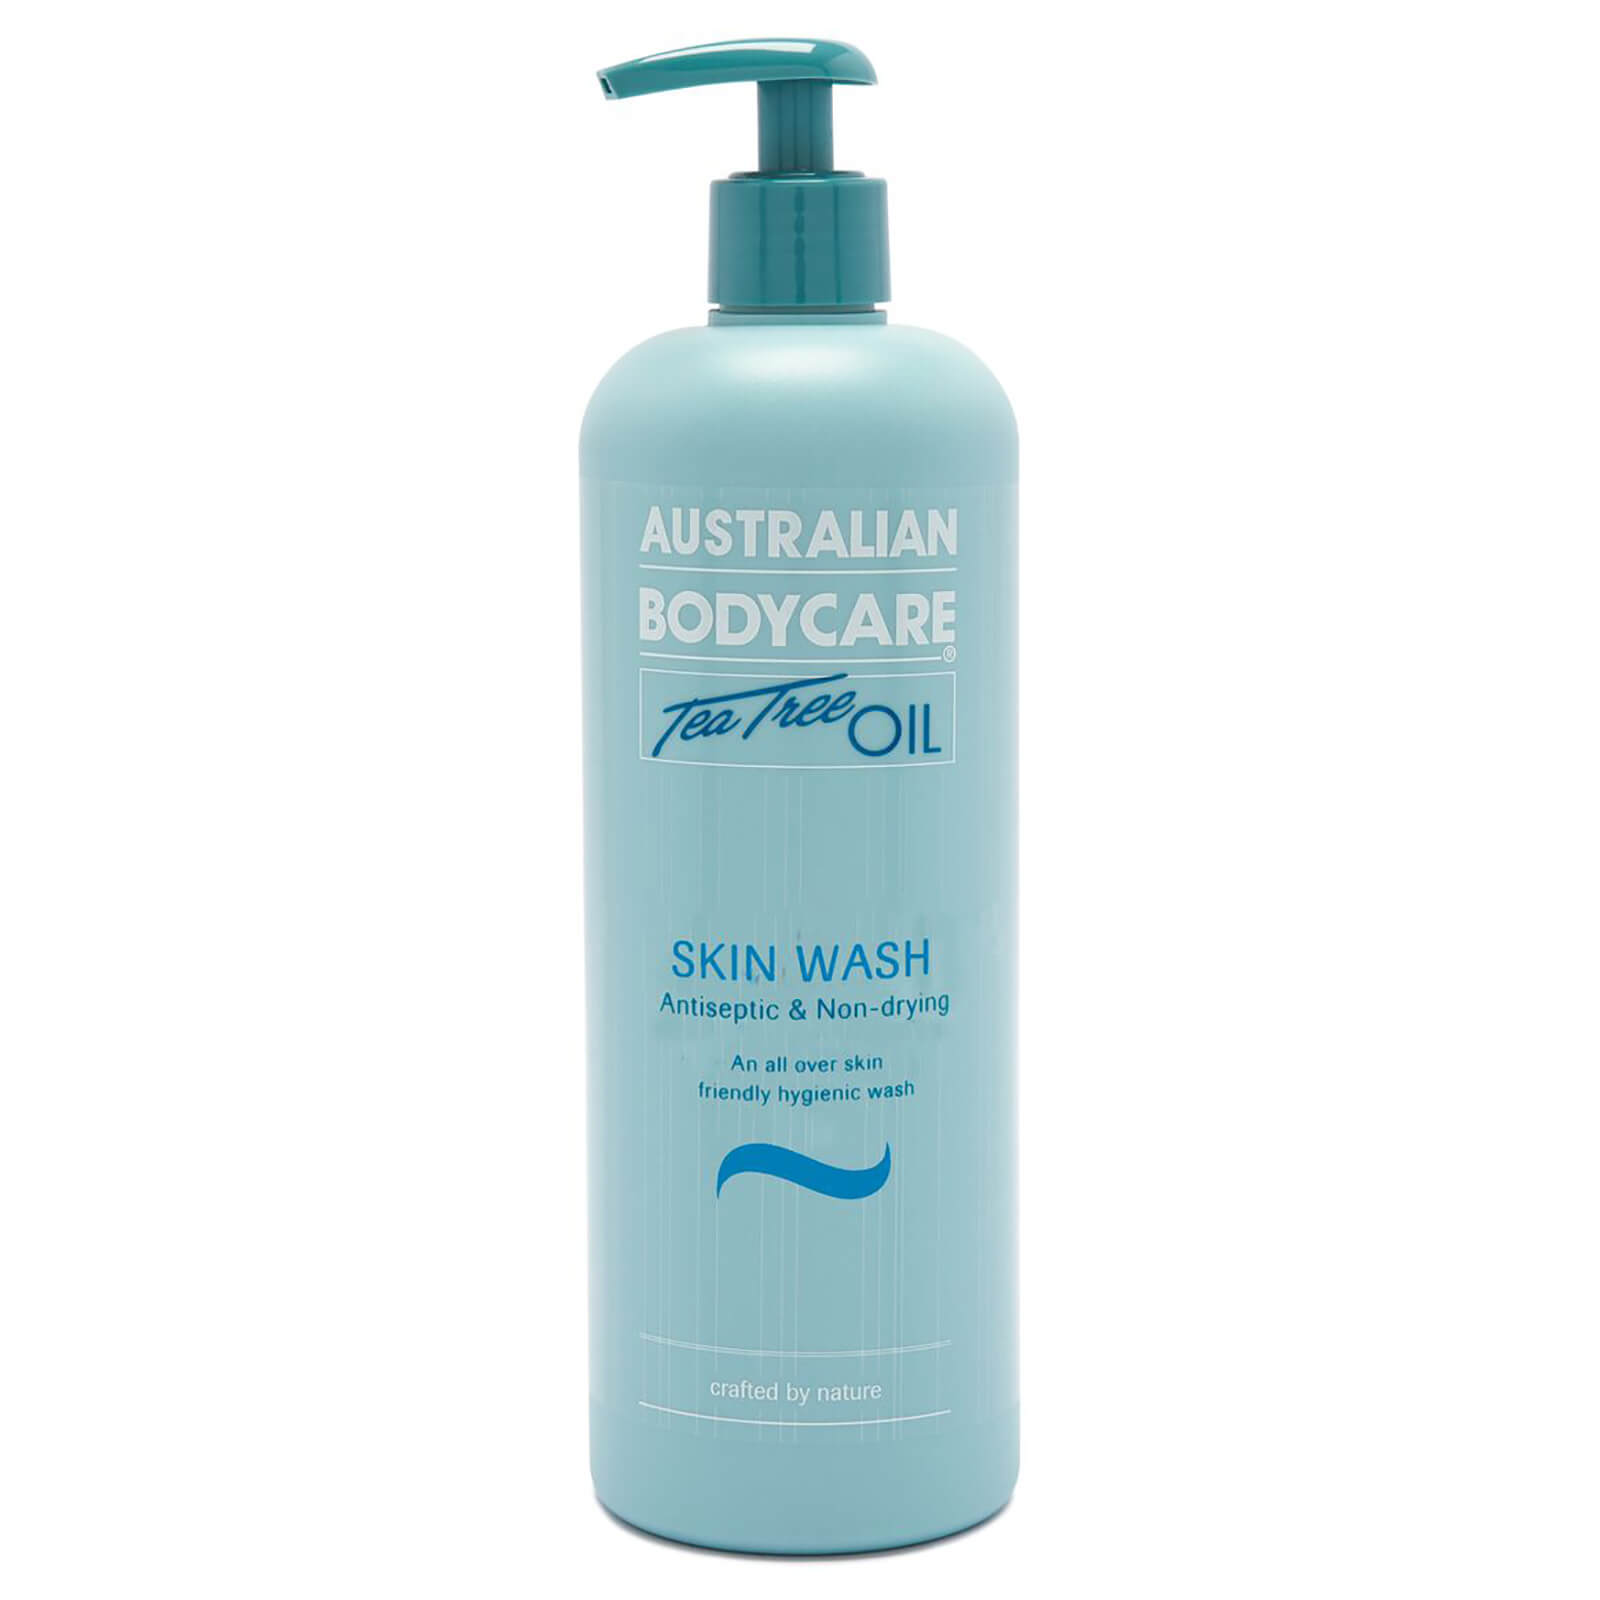  Skin Wash de Australian Bodycare (500 ml)